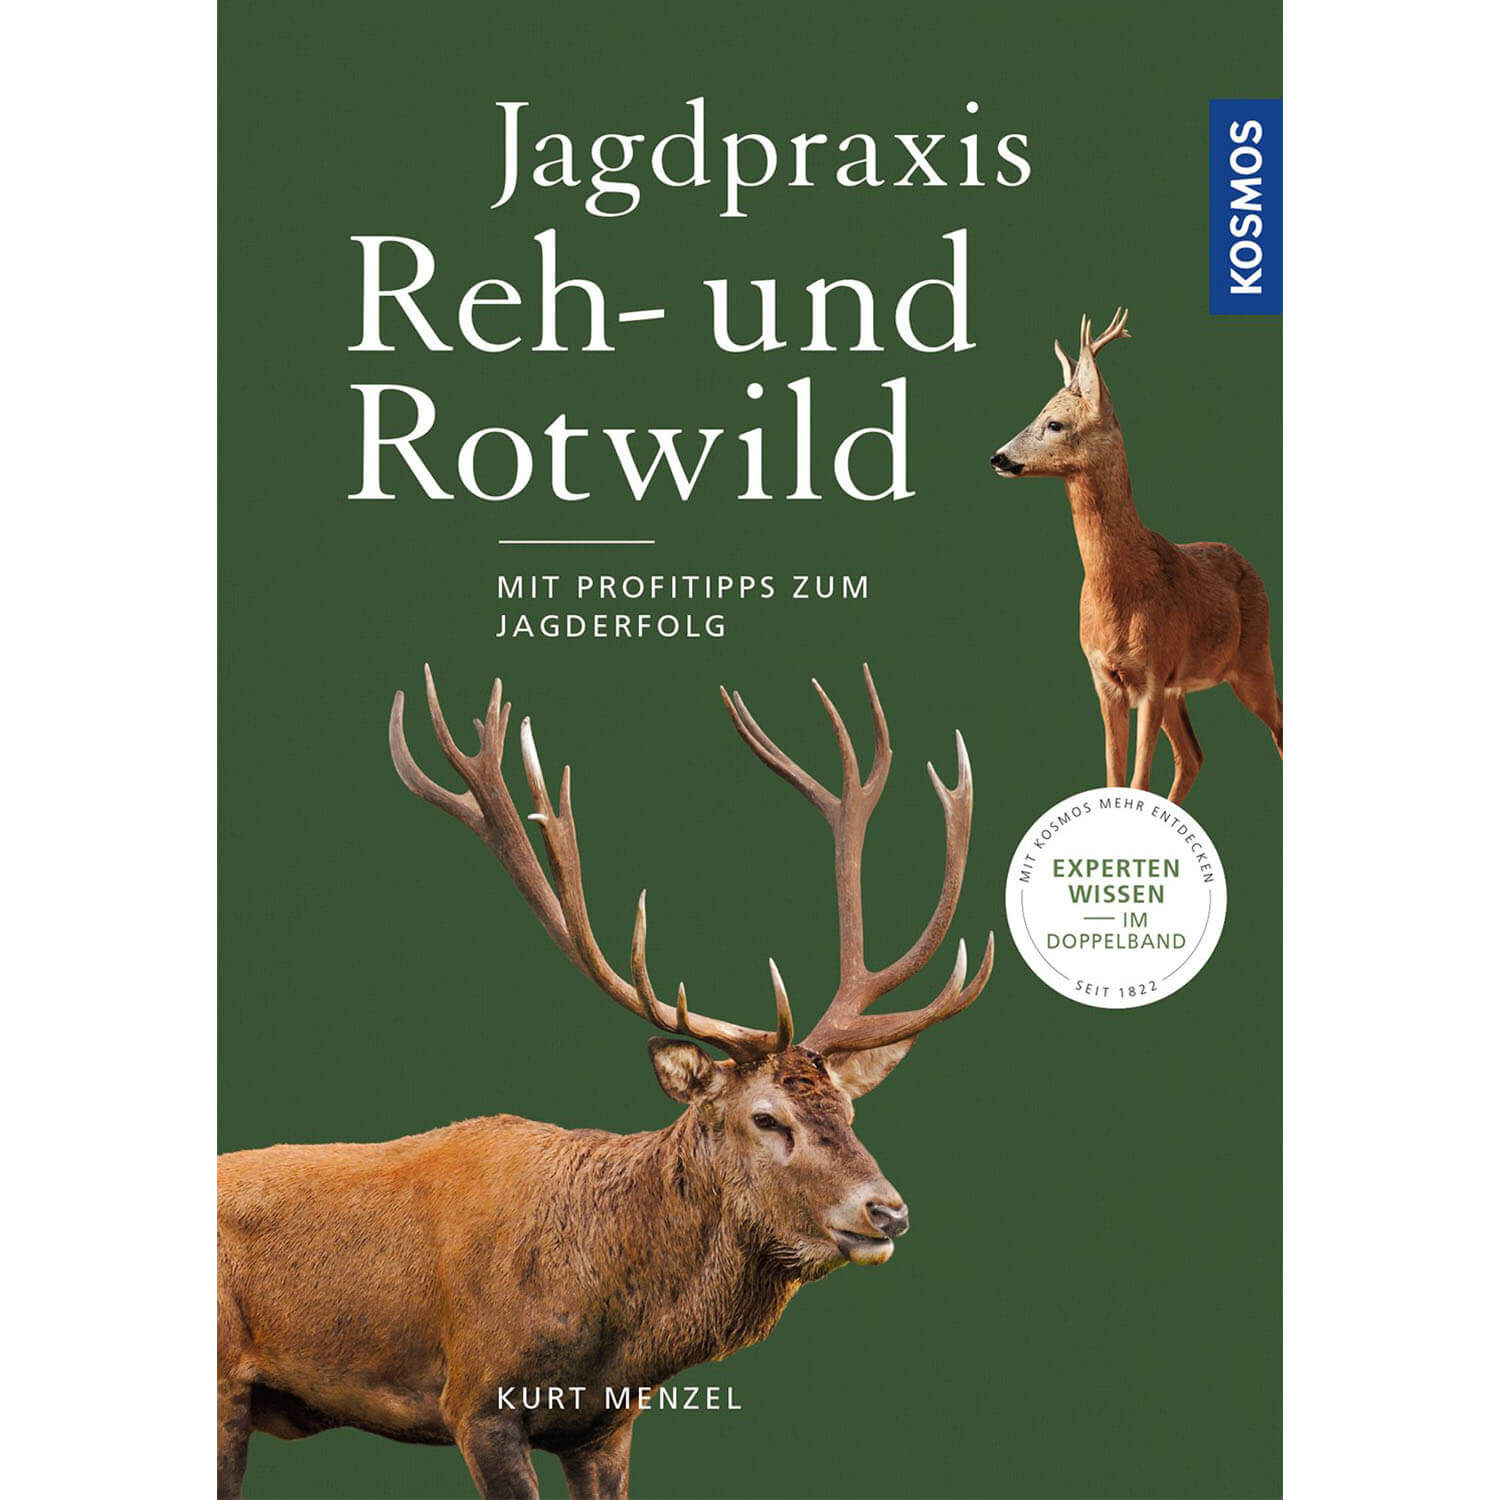 Jagdpraxis Reh- und Rotwild - Buch - Kurt Menzel - Jagdausrüstung